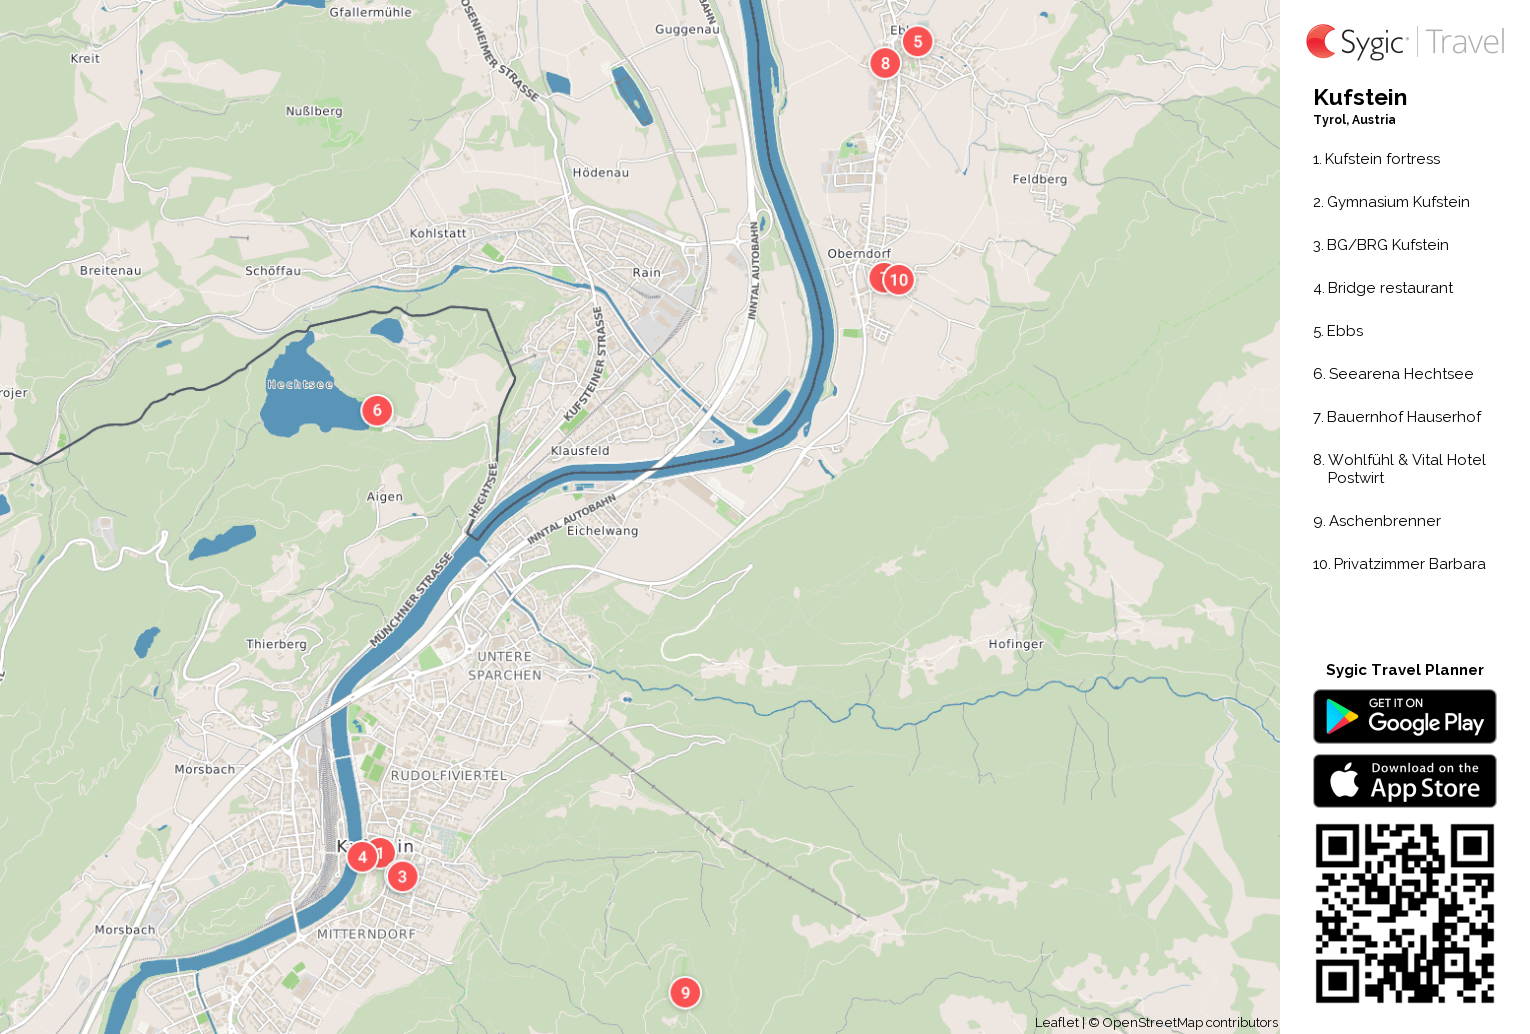 kufstein-printable-tourist-map